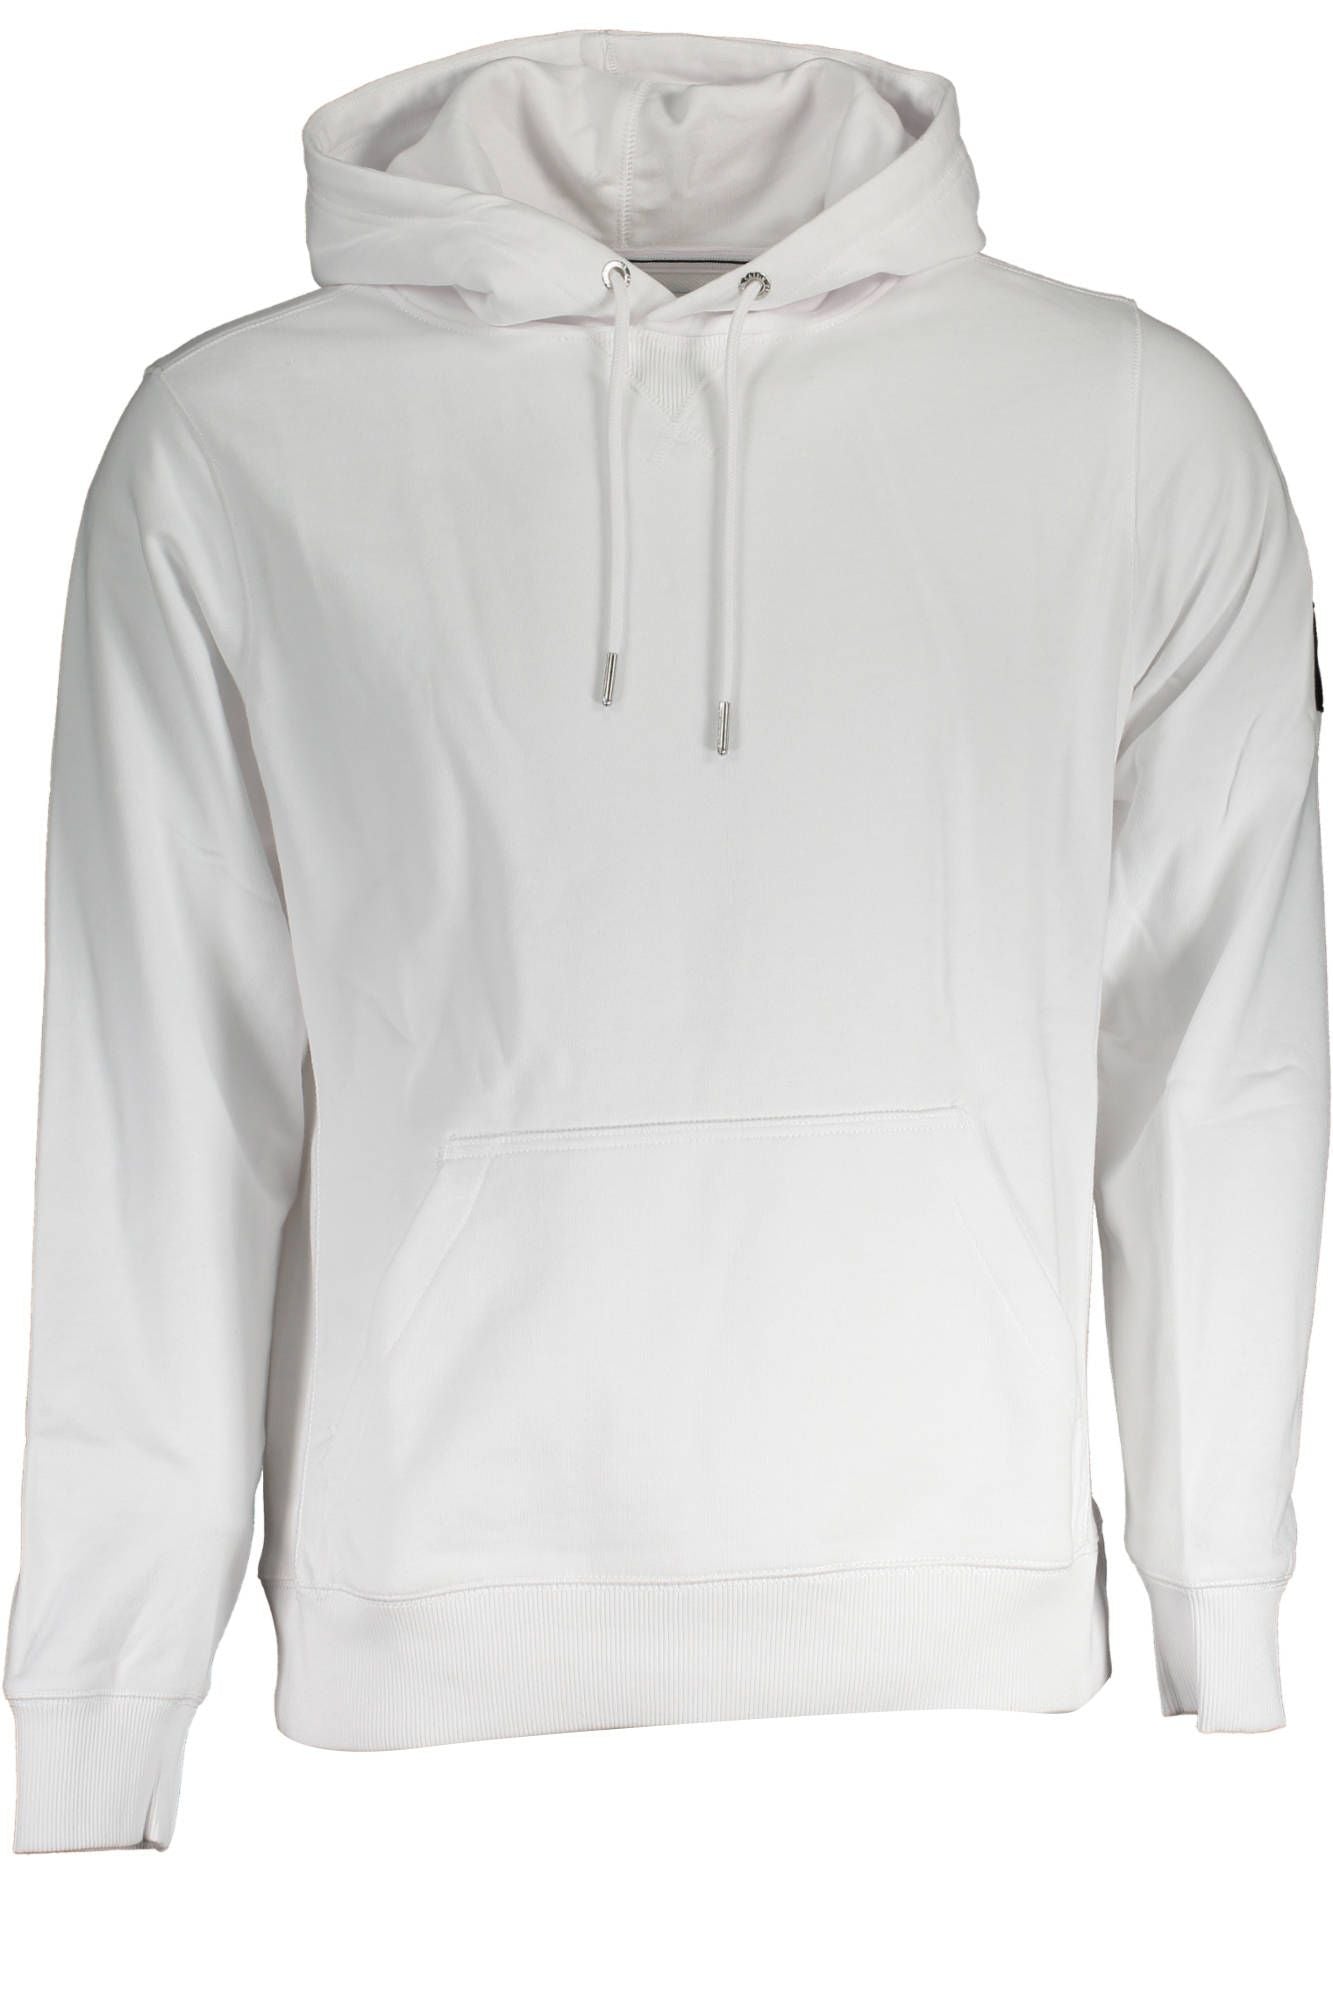 Elegant White Hooded Sweatshirt with Logo Detail